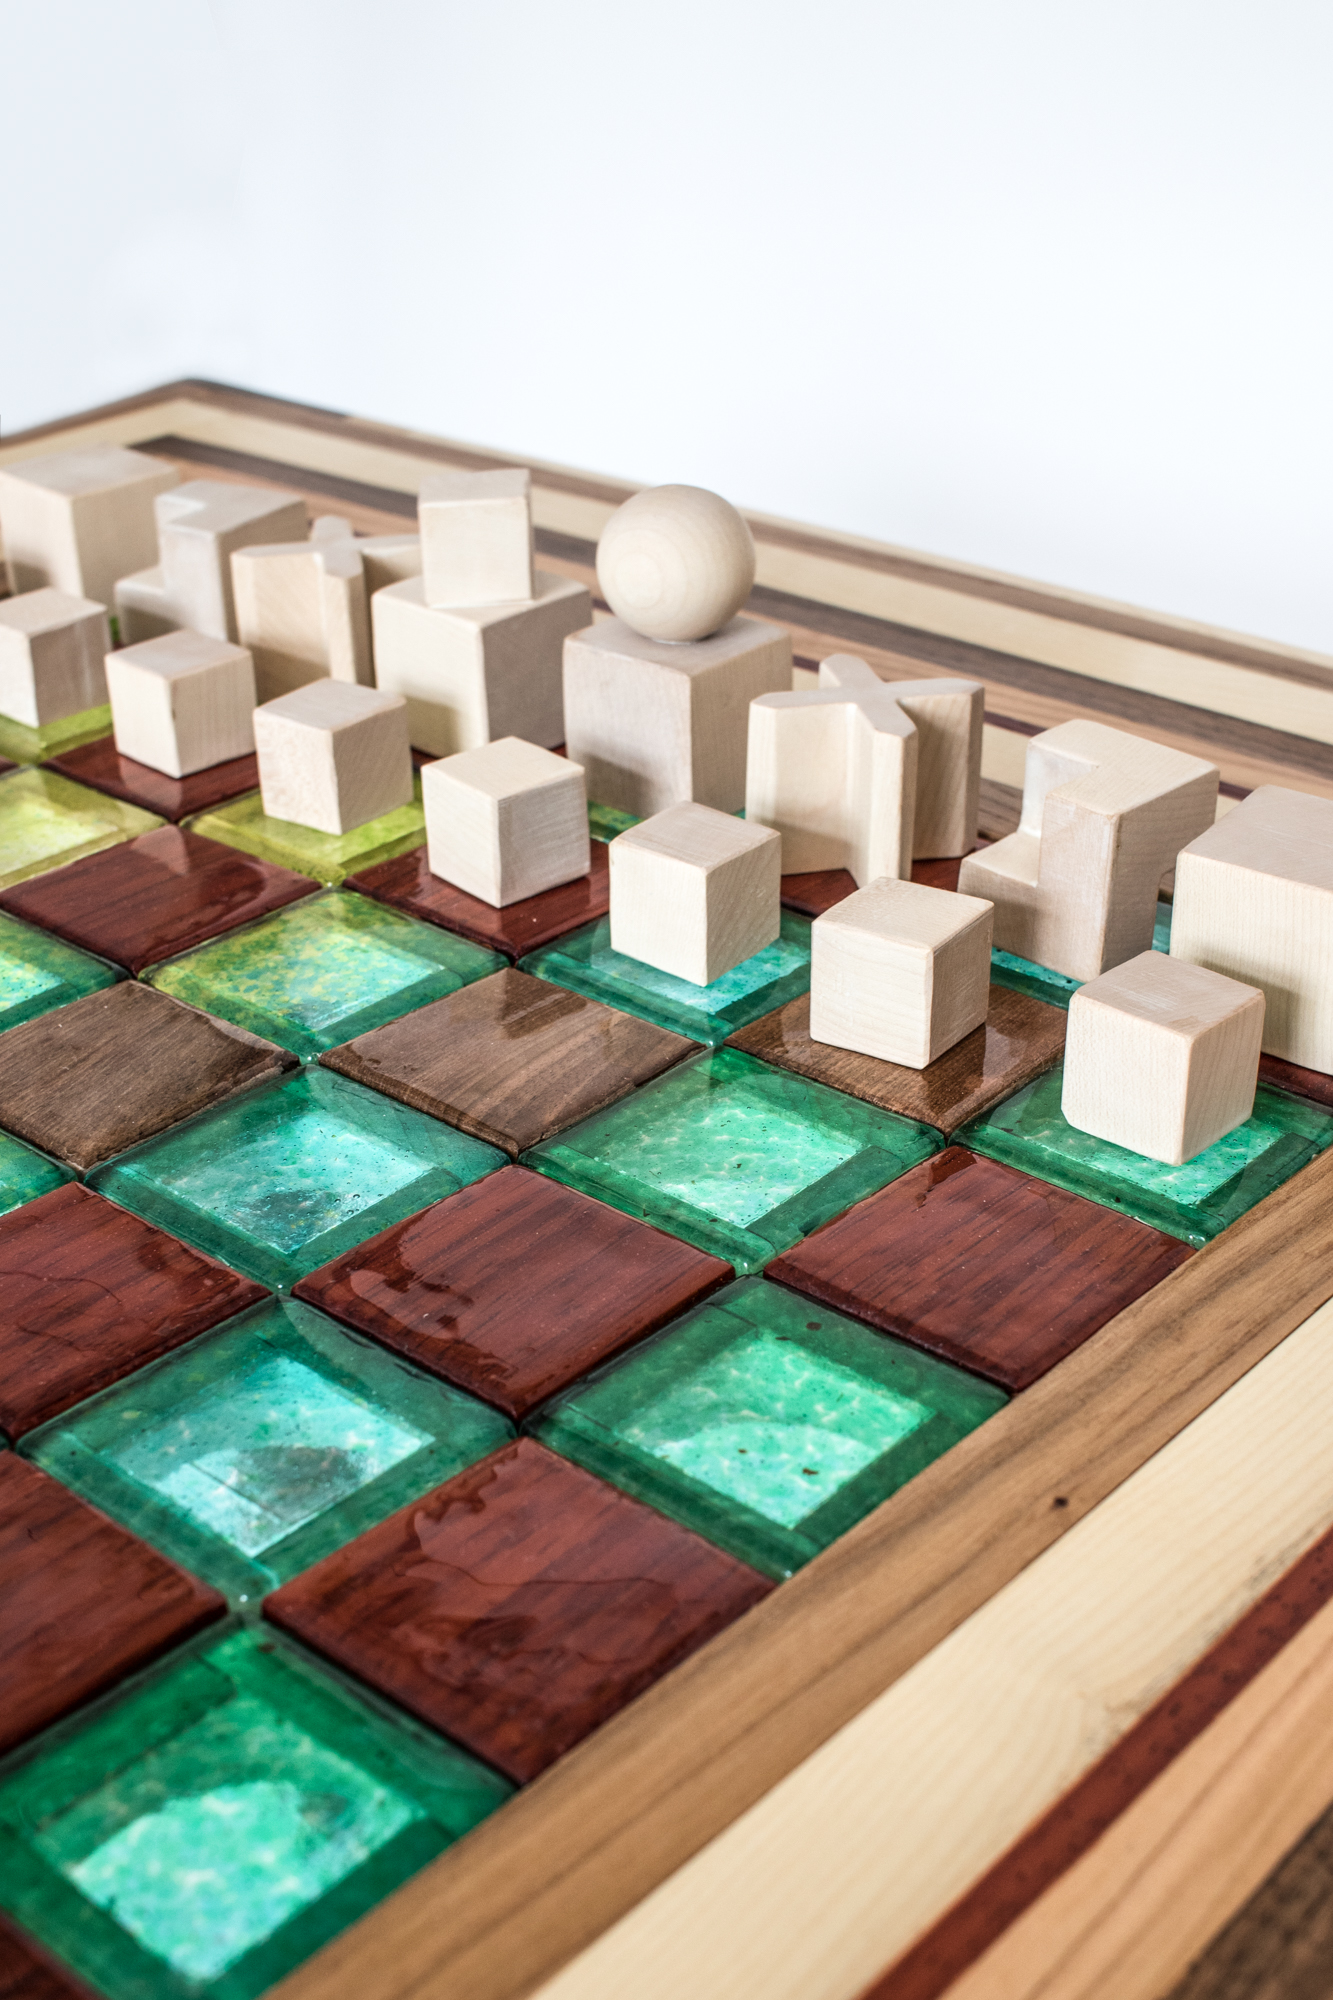 Chaturanga, Board Game